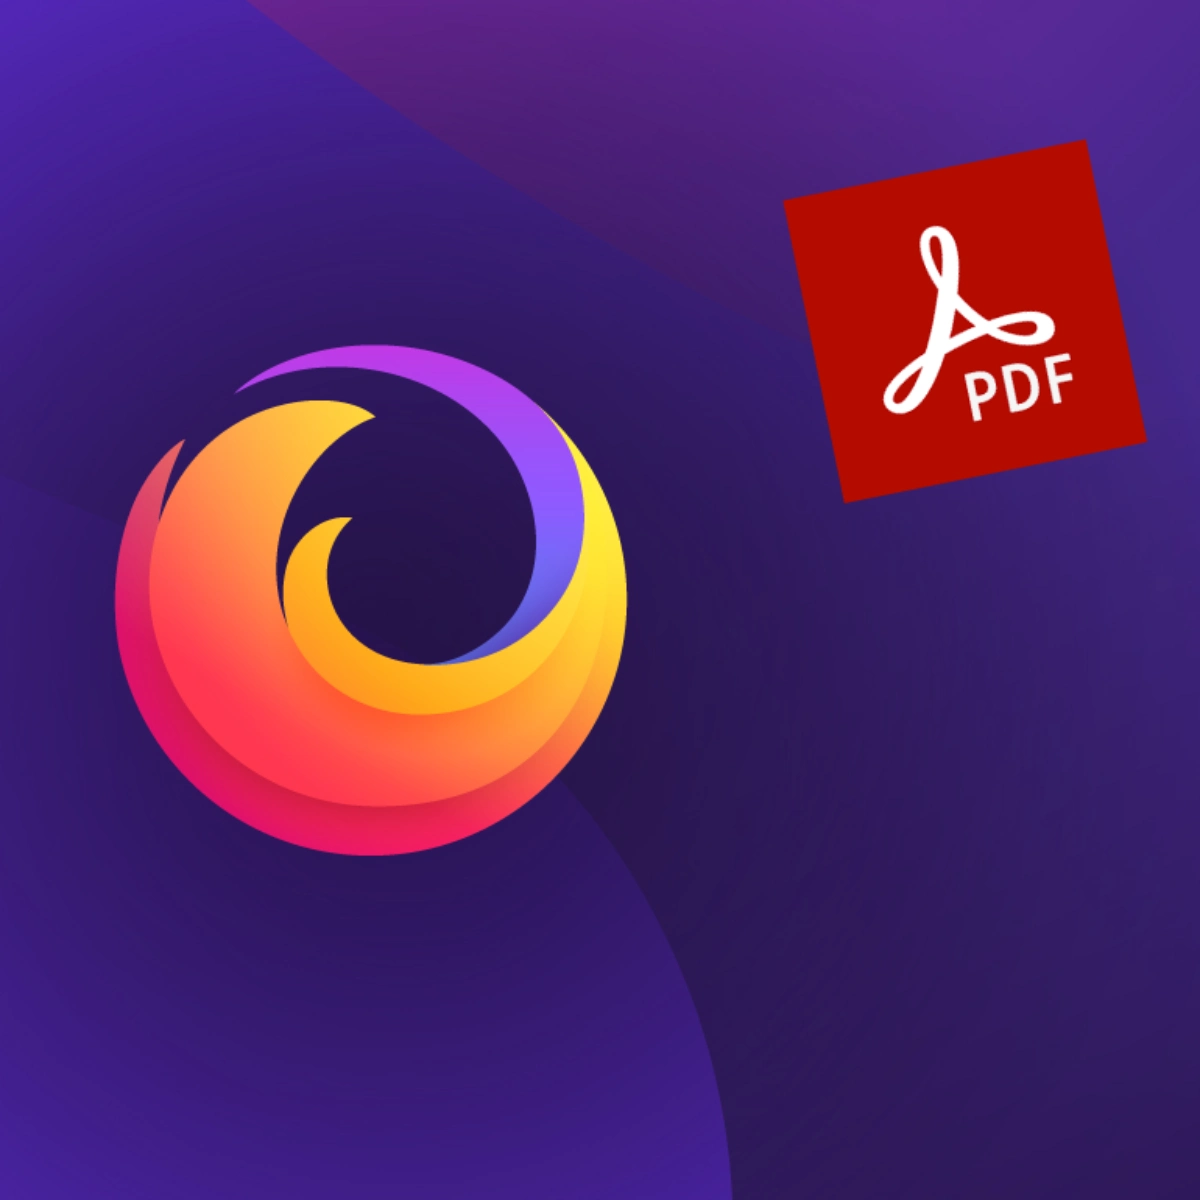 Firefox Browser 106 brings in PDF editing